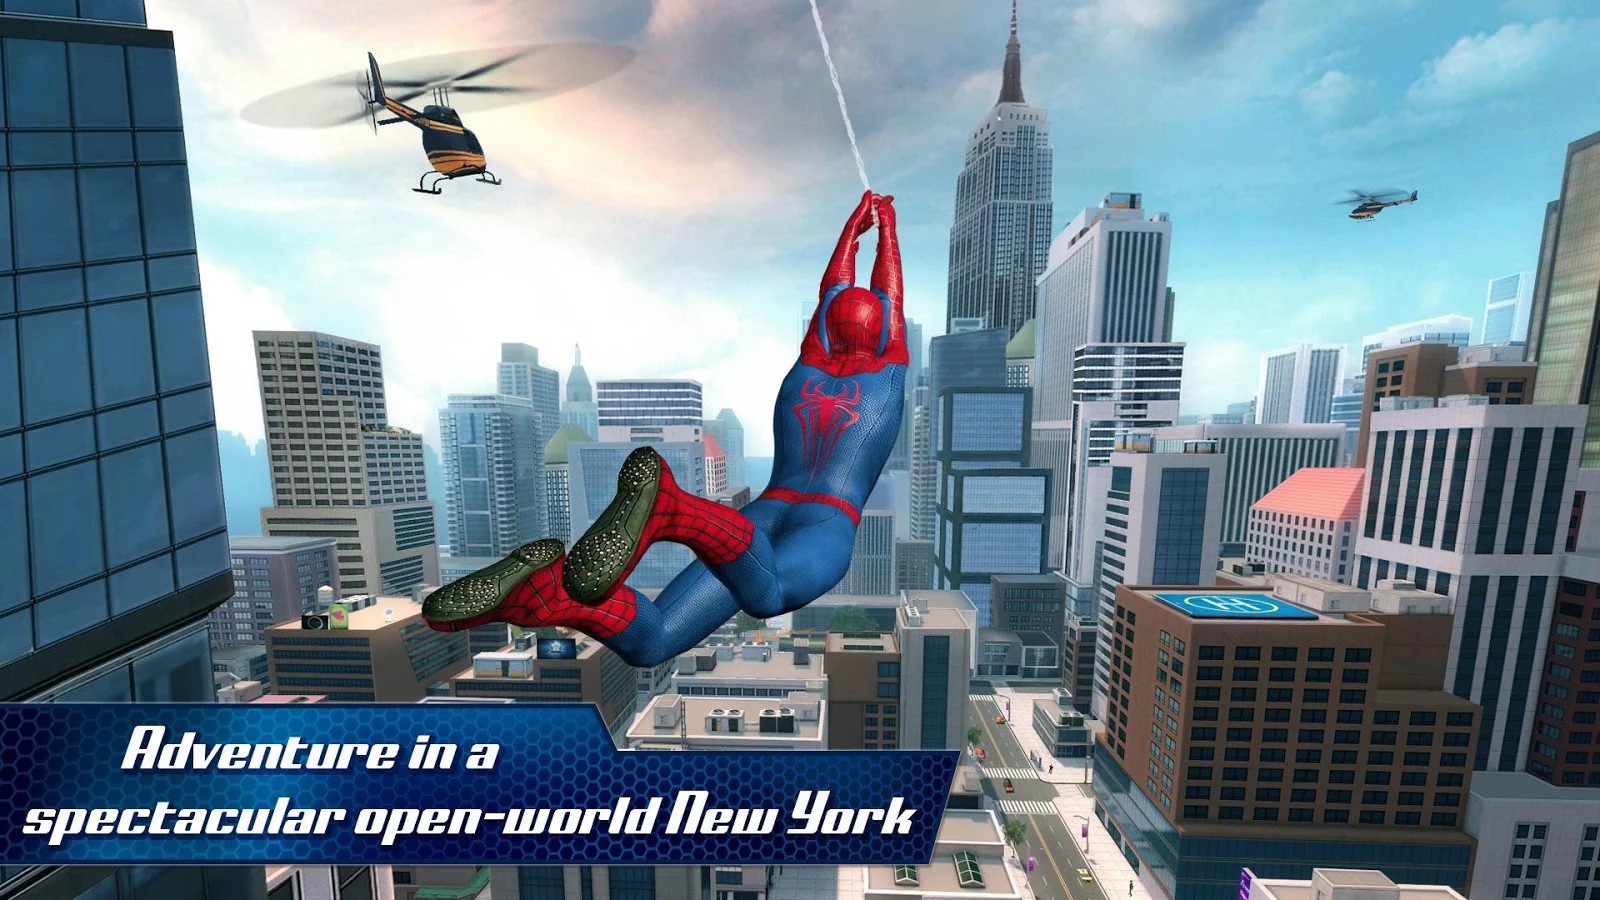 Spider-Man: Shattered Dimensions HD wallpapers, Desktop wallpaper - most viewed